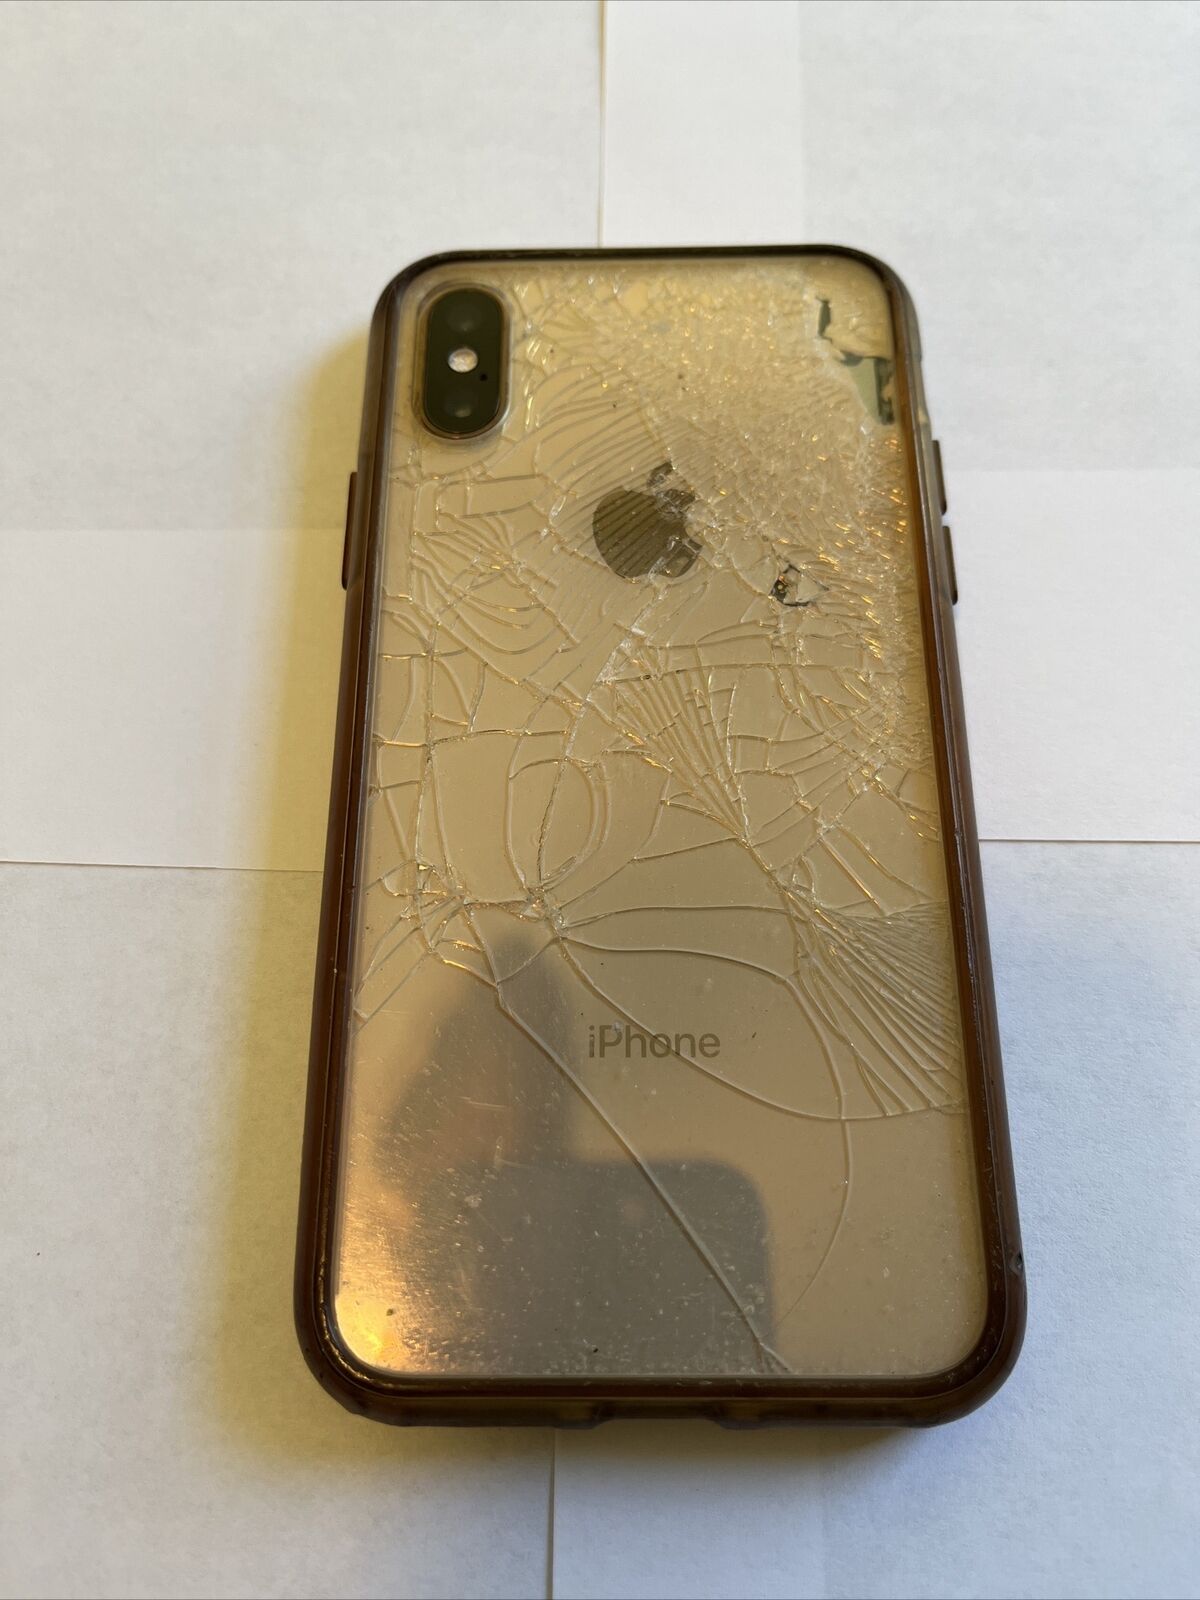 iPhone Xs Gold 64gb Unlocked | eBay